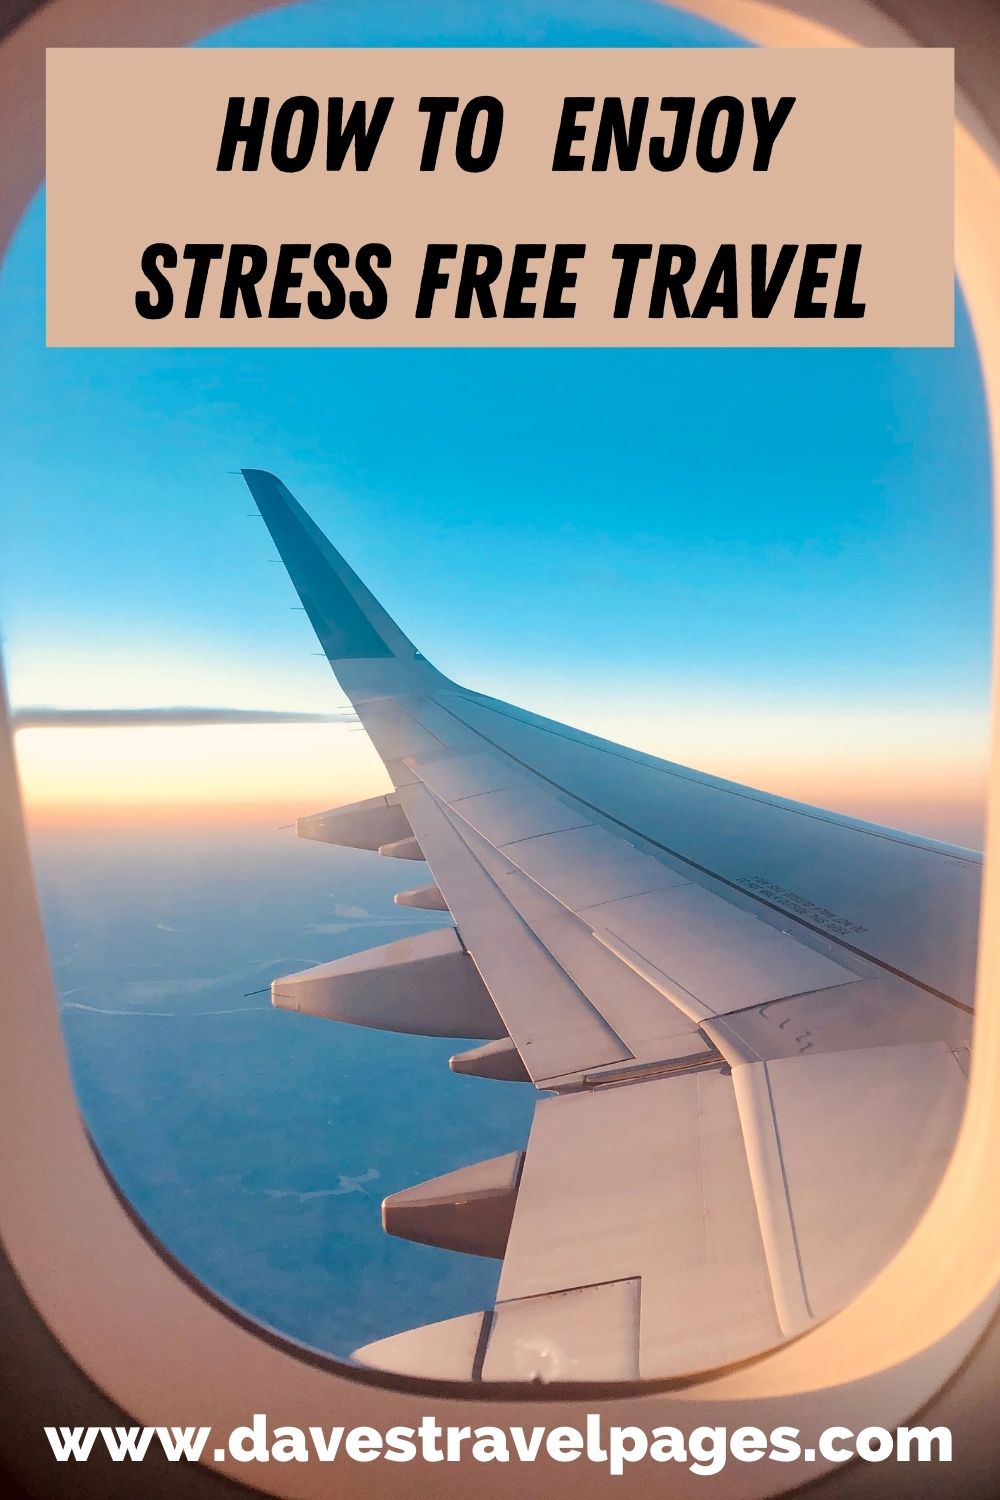 How to enjoy stress free travel